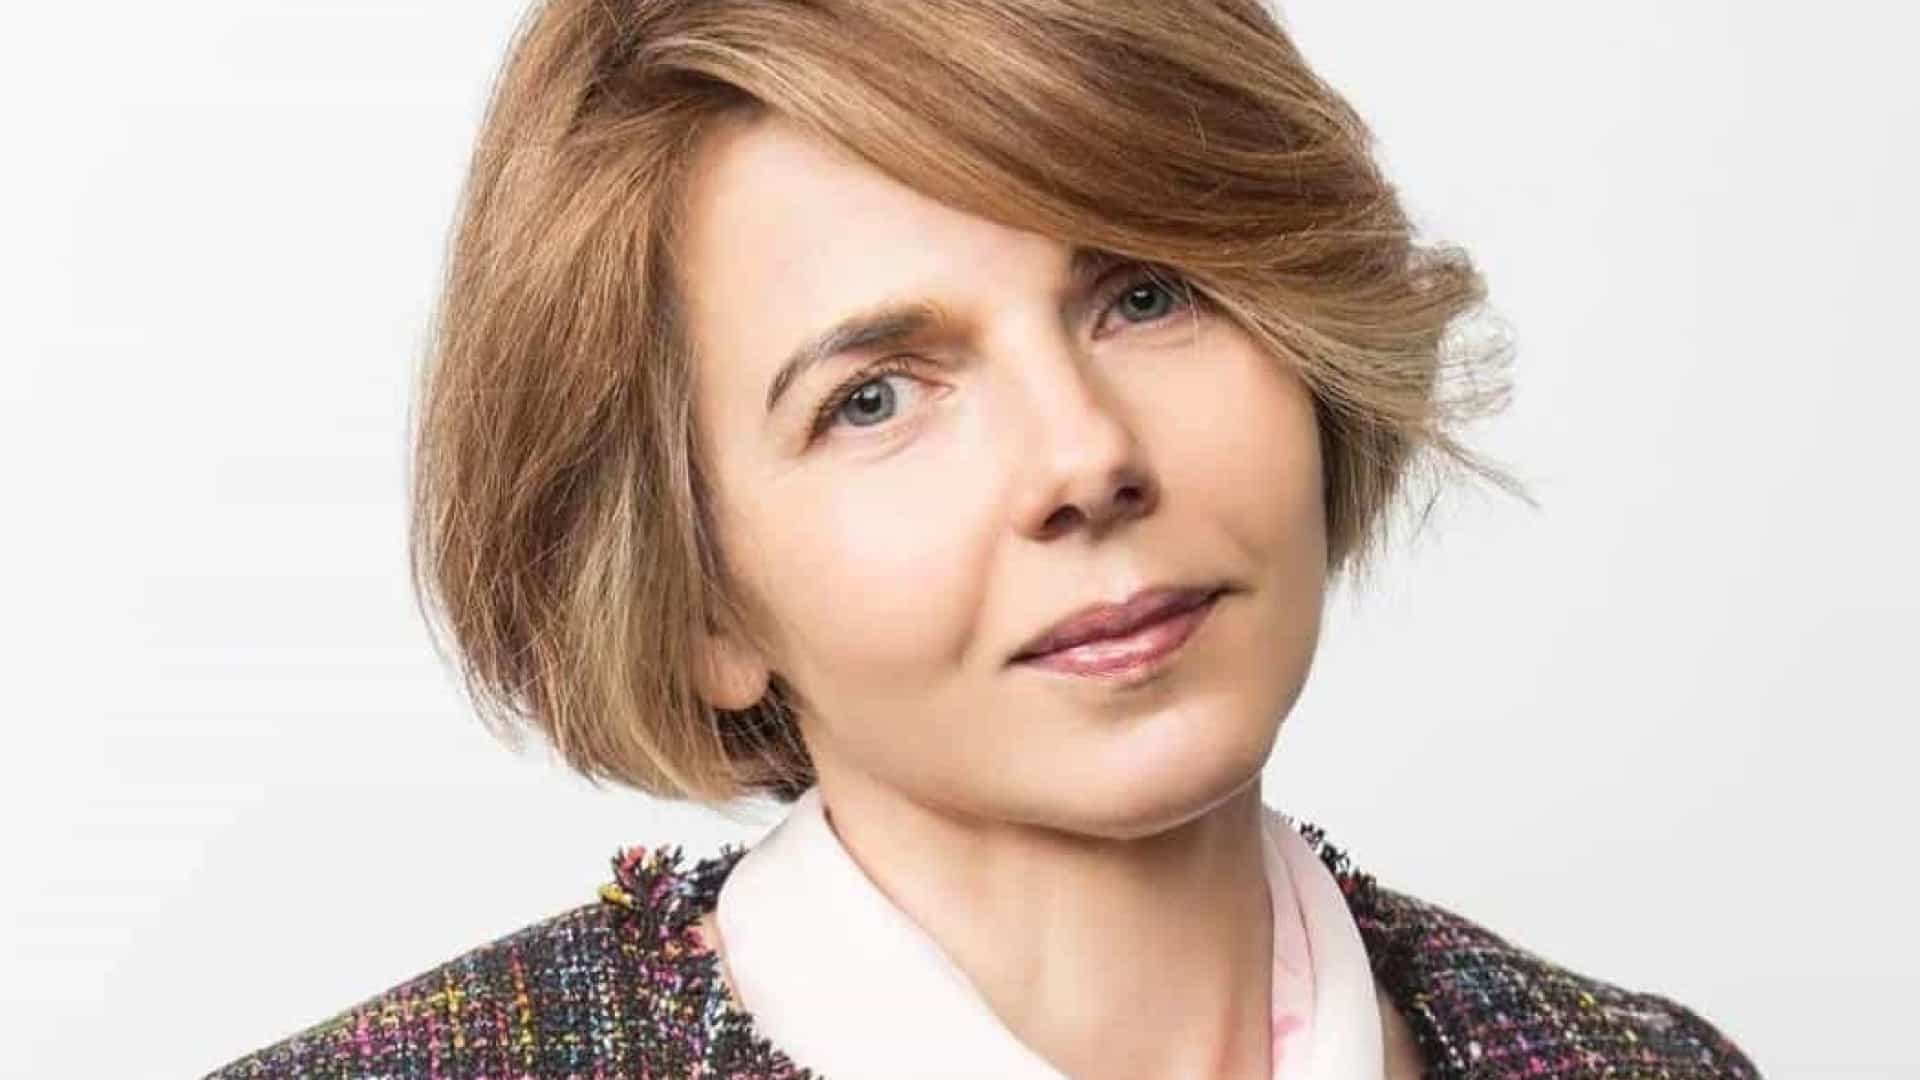 Jornalista morre na sequência de ataques russos a Kiev durante visita de Guterres